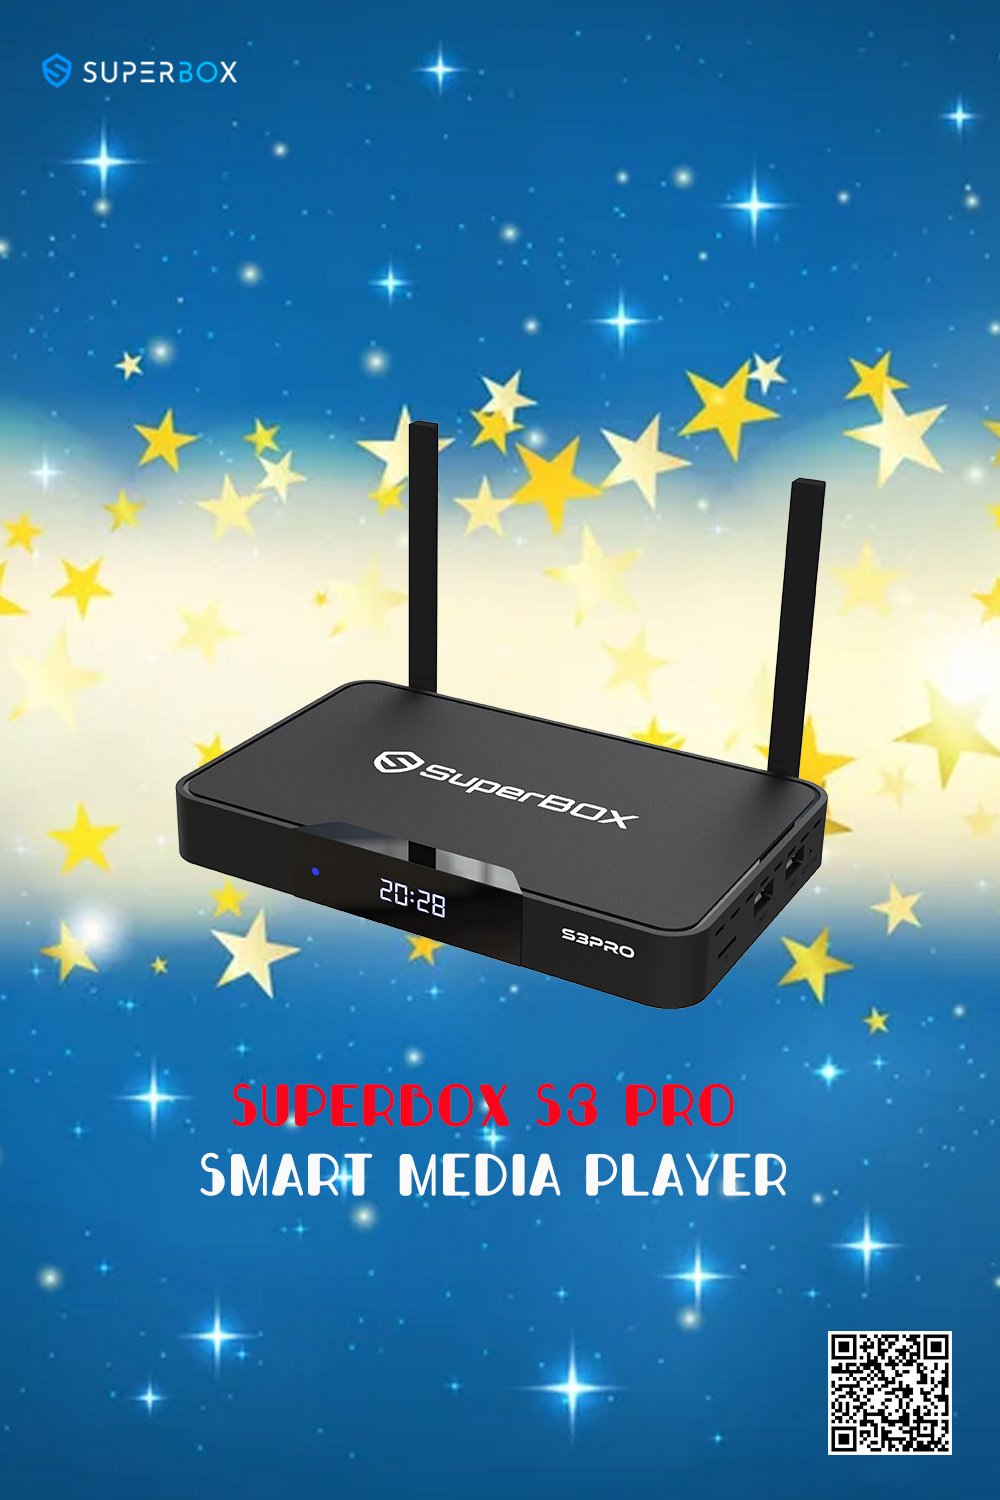 SuperBox S3 Pro Smart Media Player Bewertung